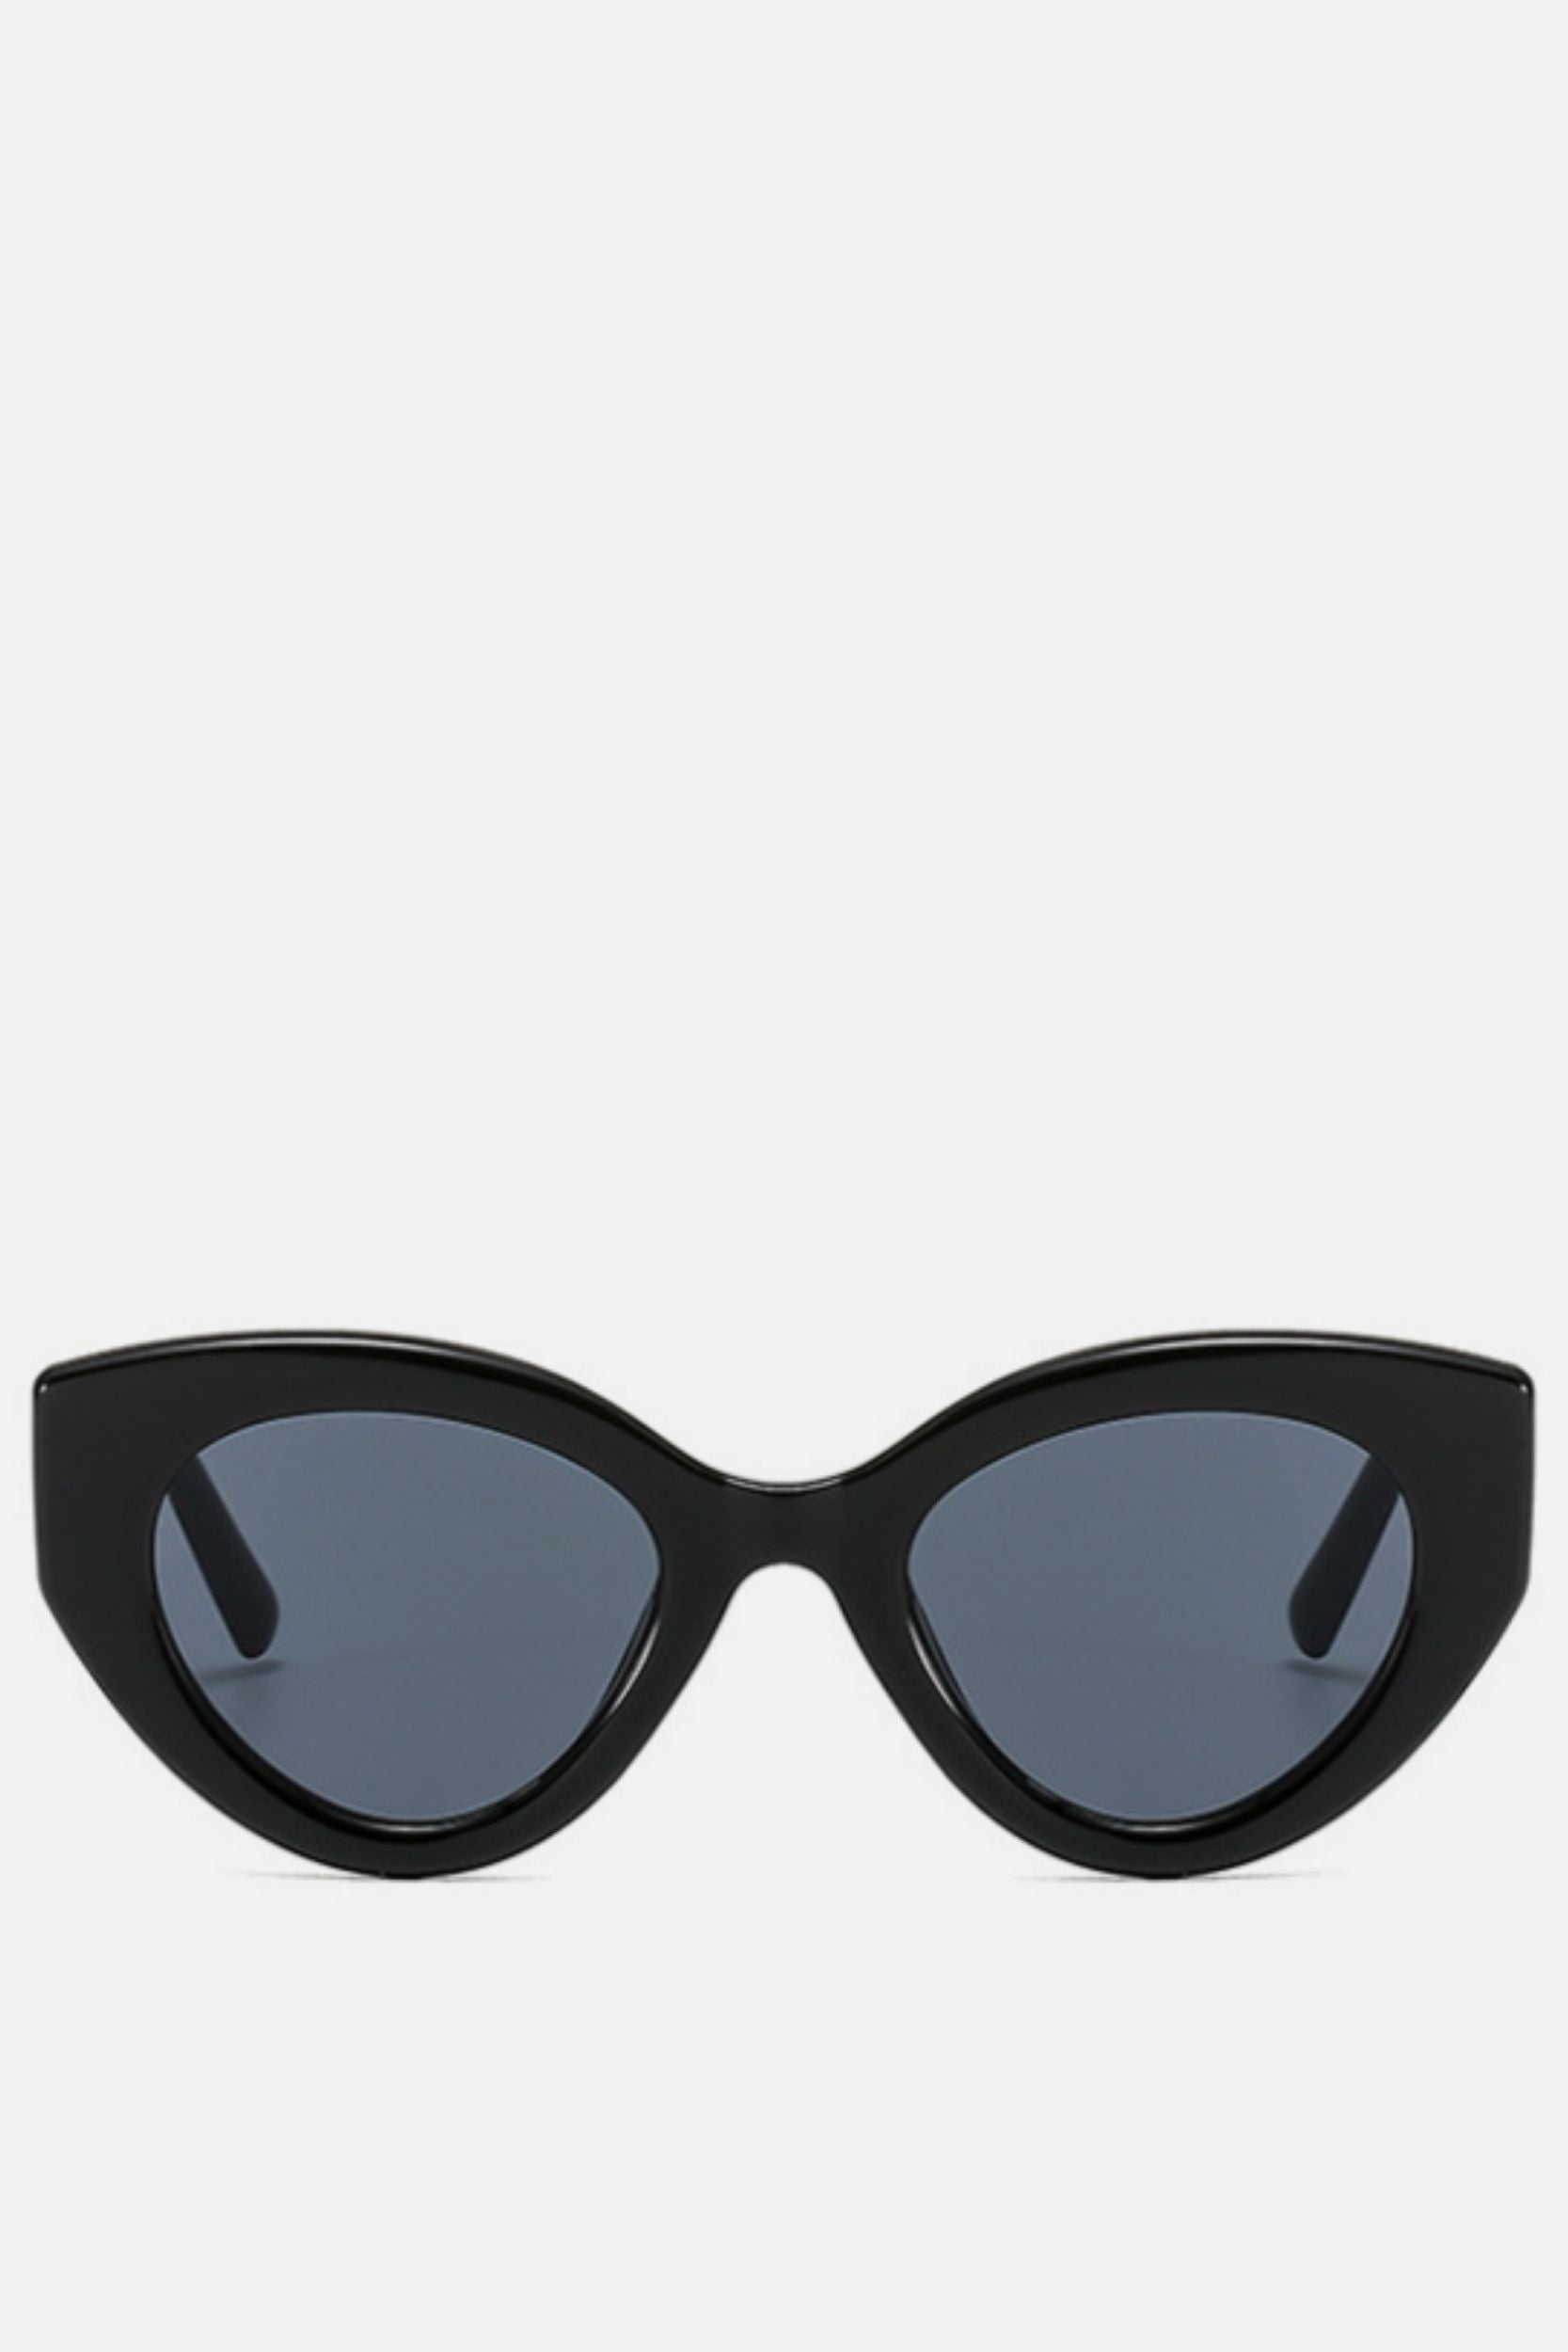 POSITANO Black Oversized Cat Eye Sunglasses